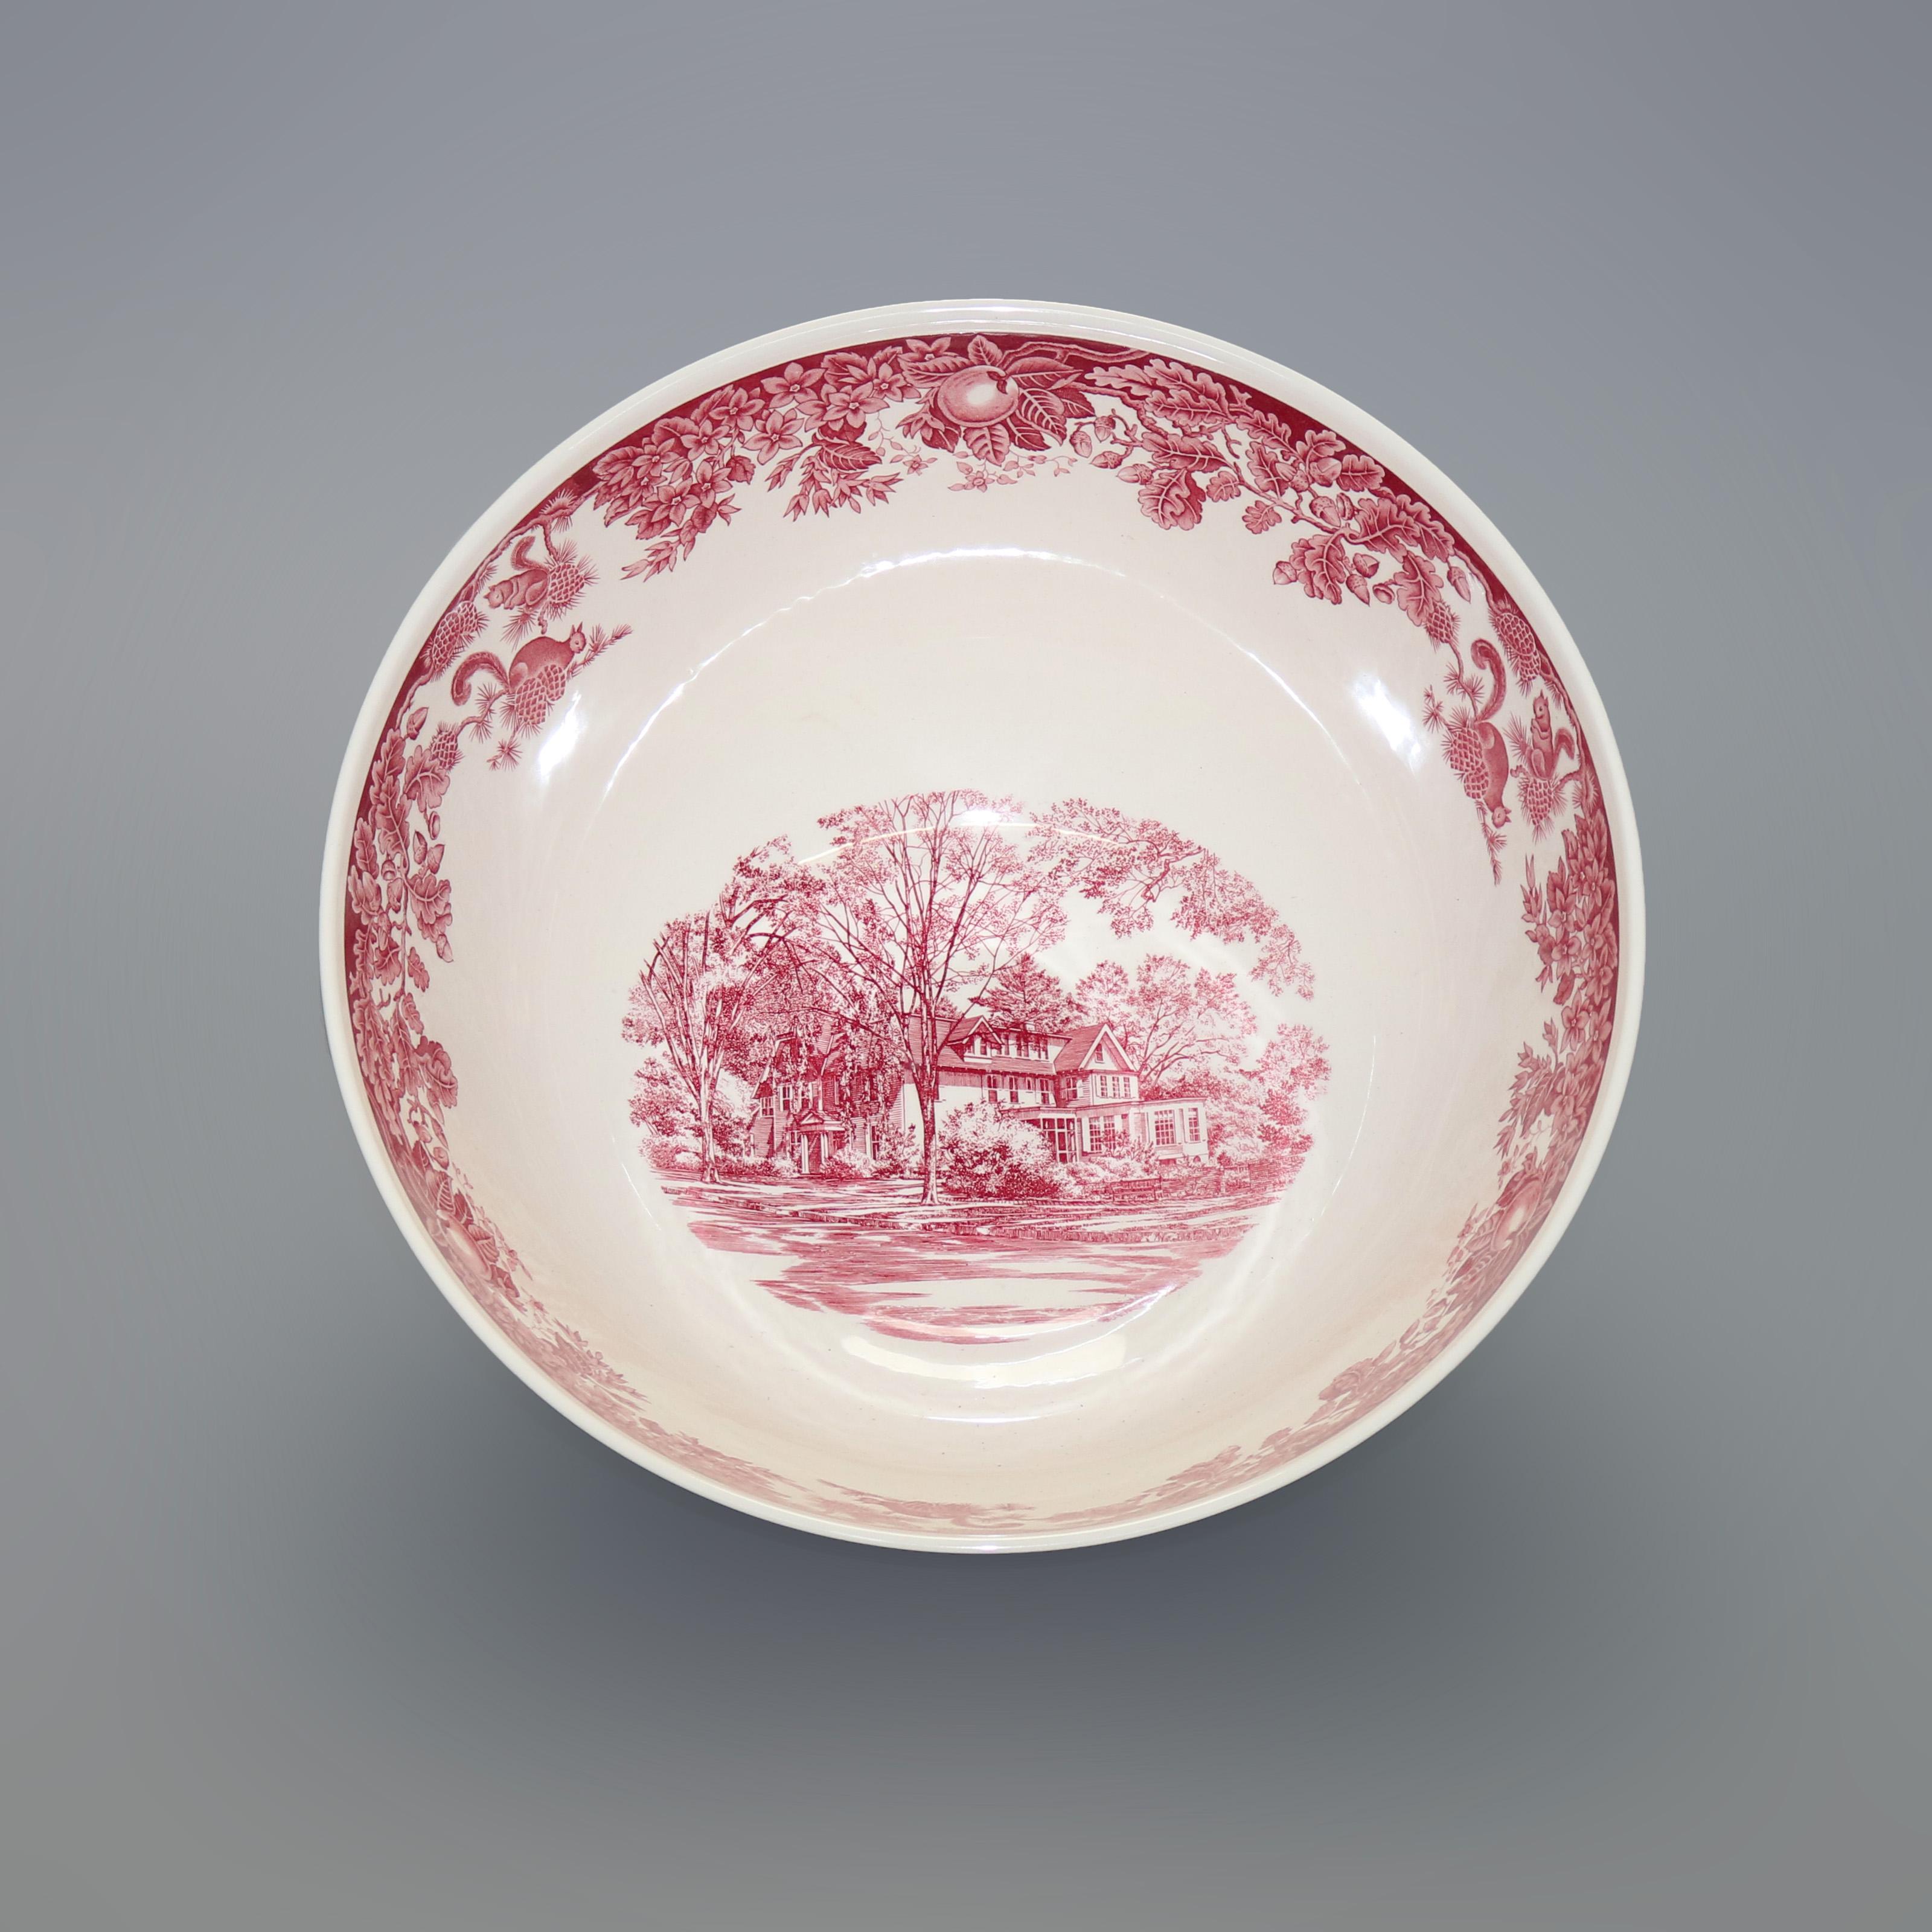 Antique English Wedgwood Scenic Red & White Porcelain Center Bowl, 20thC 6